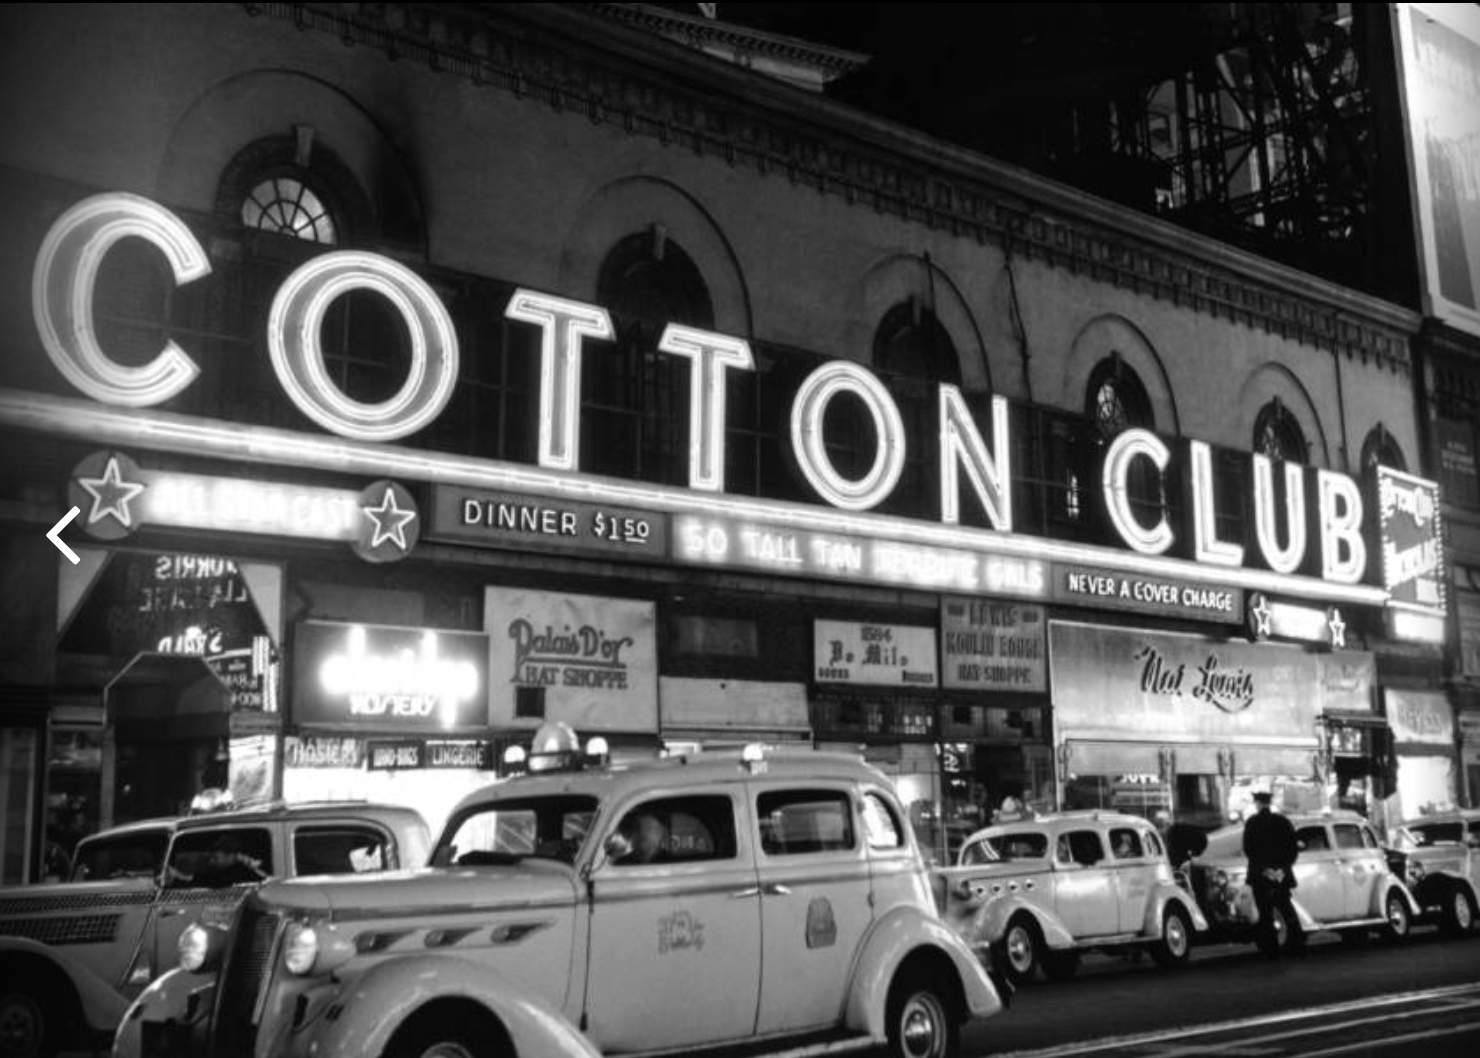 Cotton Club 1937